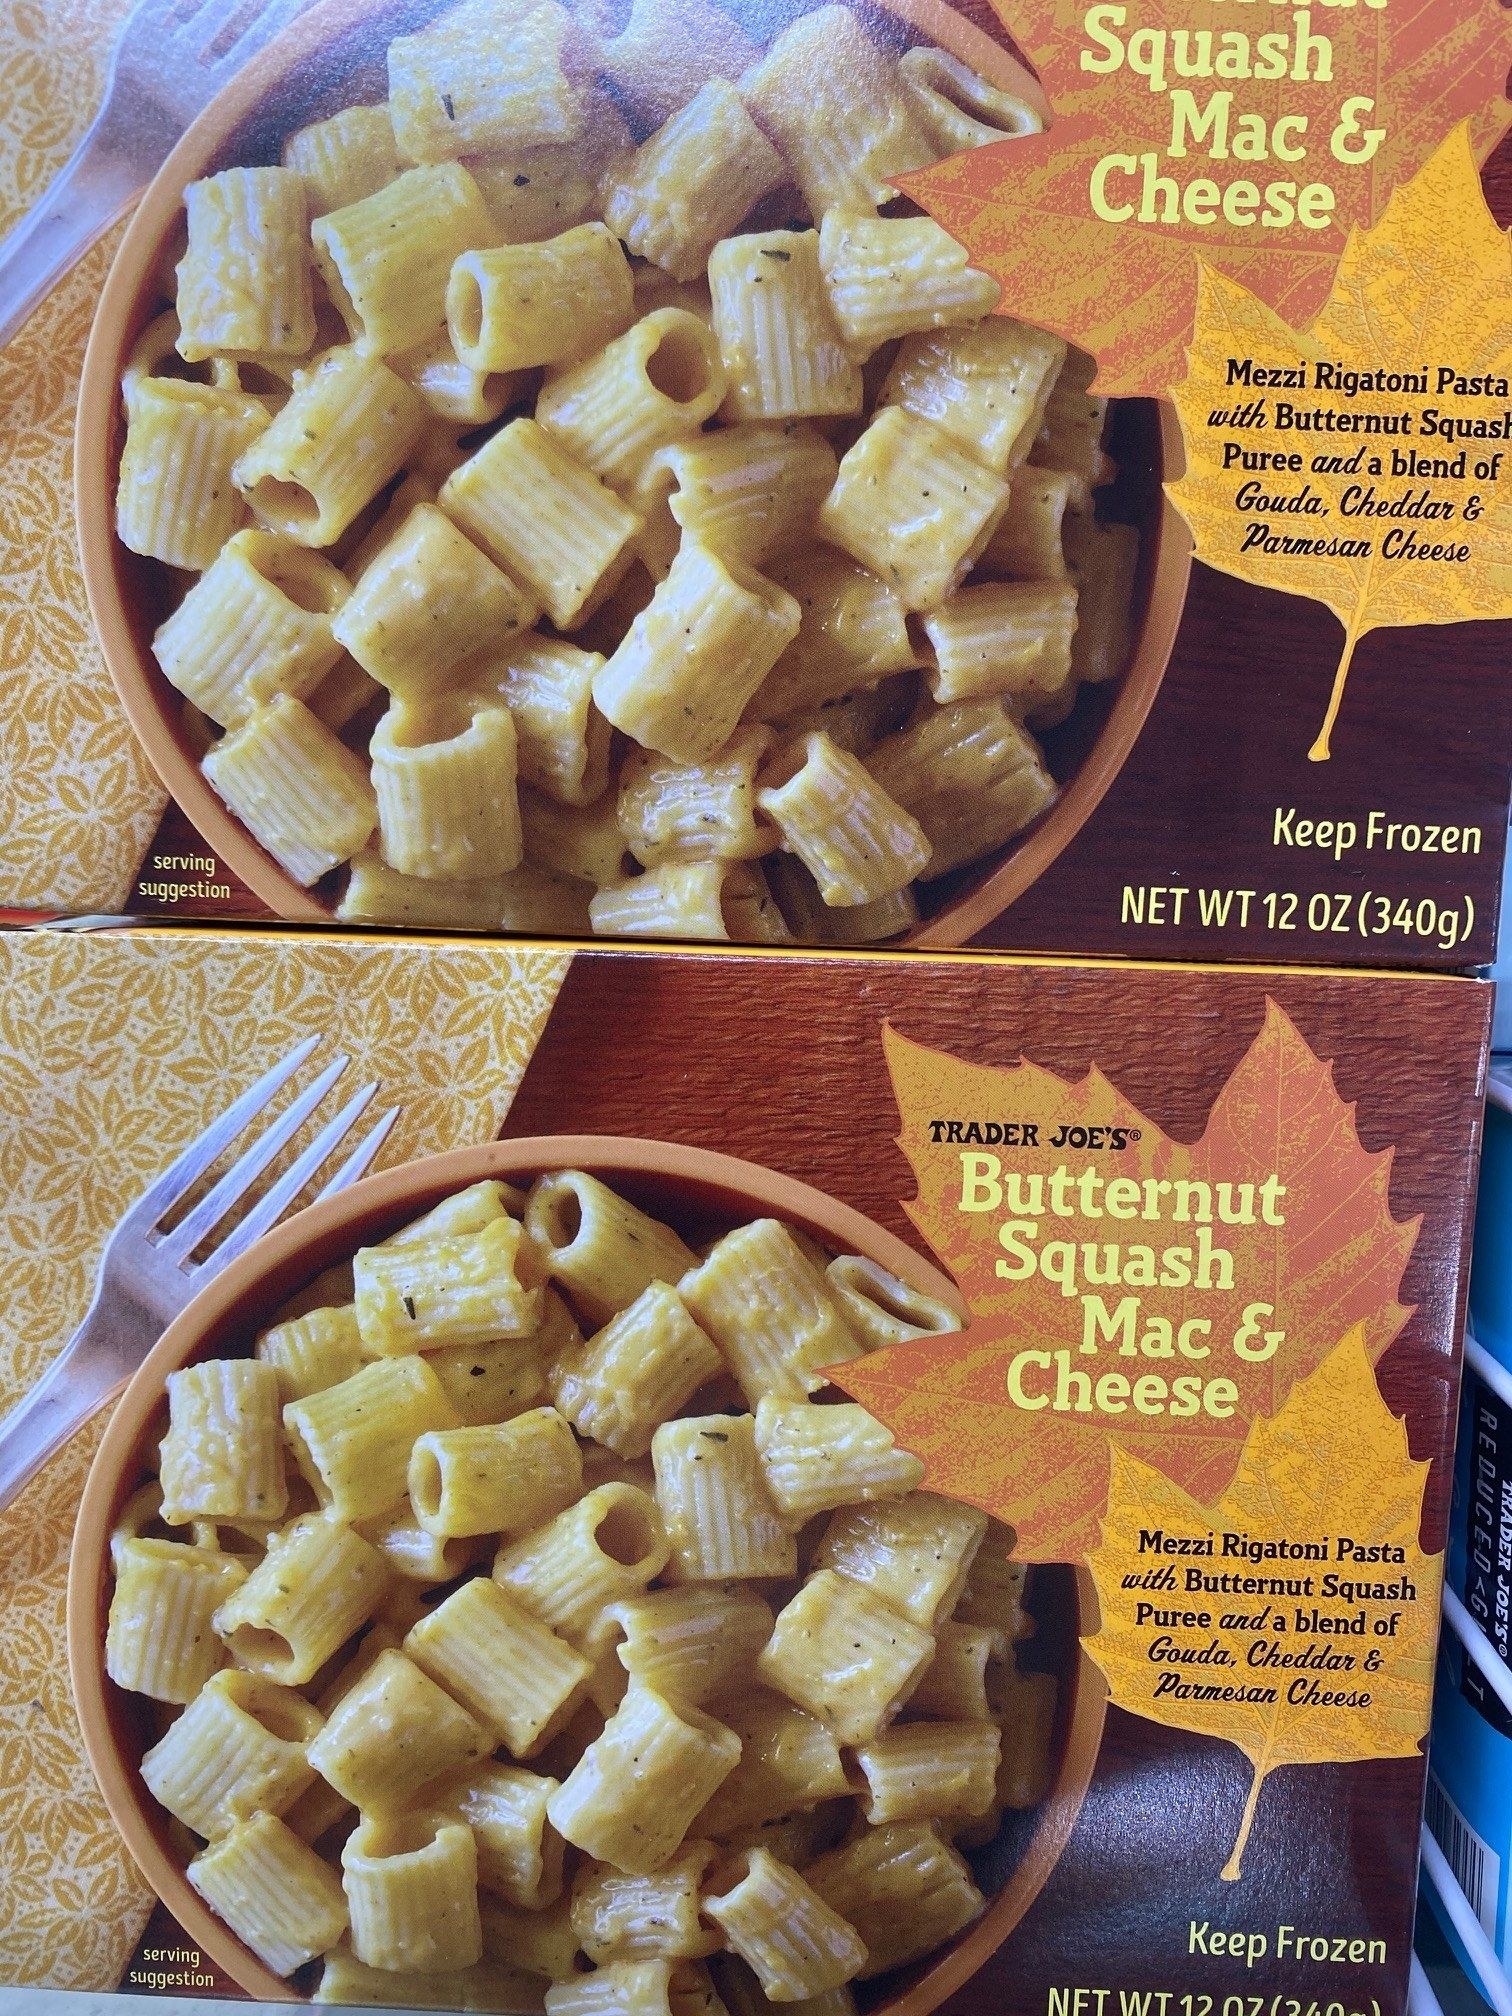 Boxes of Butternut Squash Mac &#x27;n&#x27; Cheese.